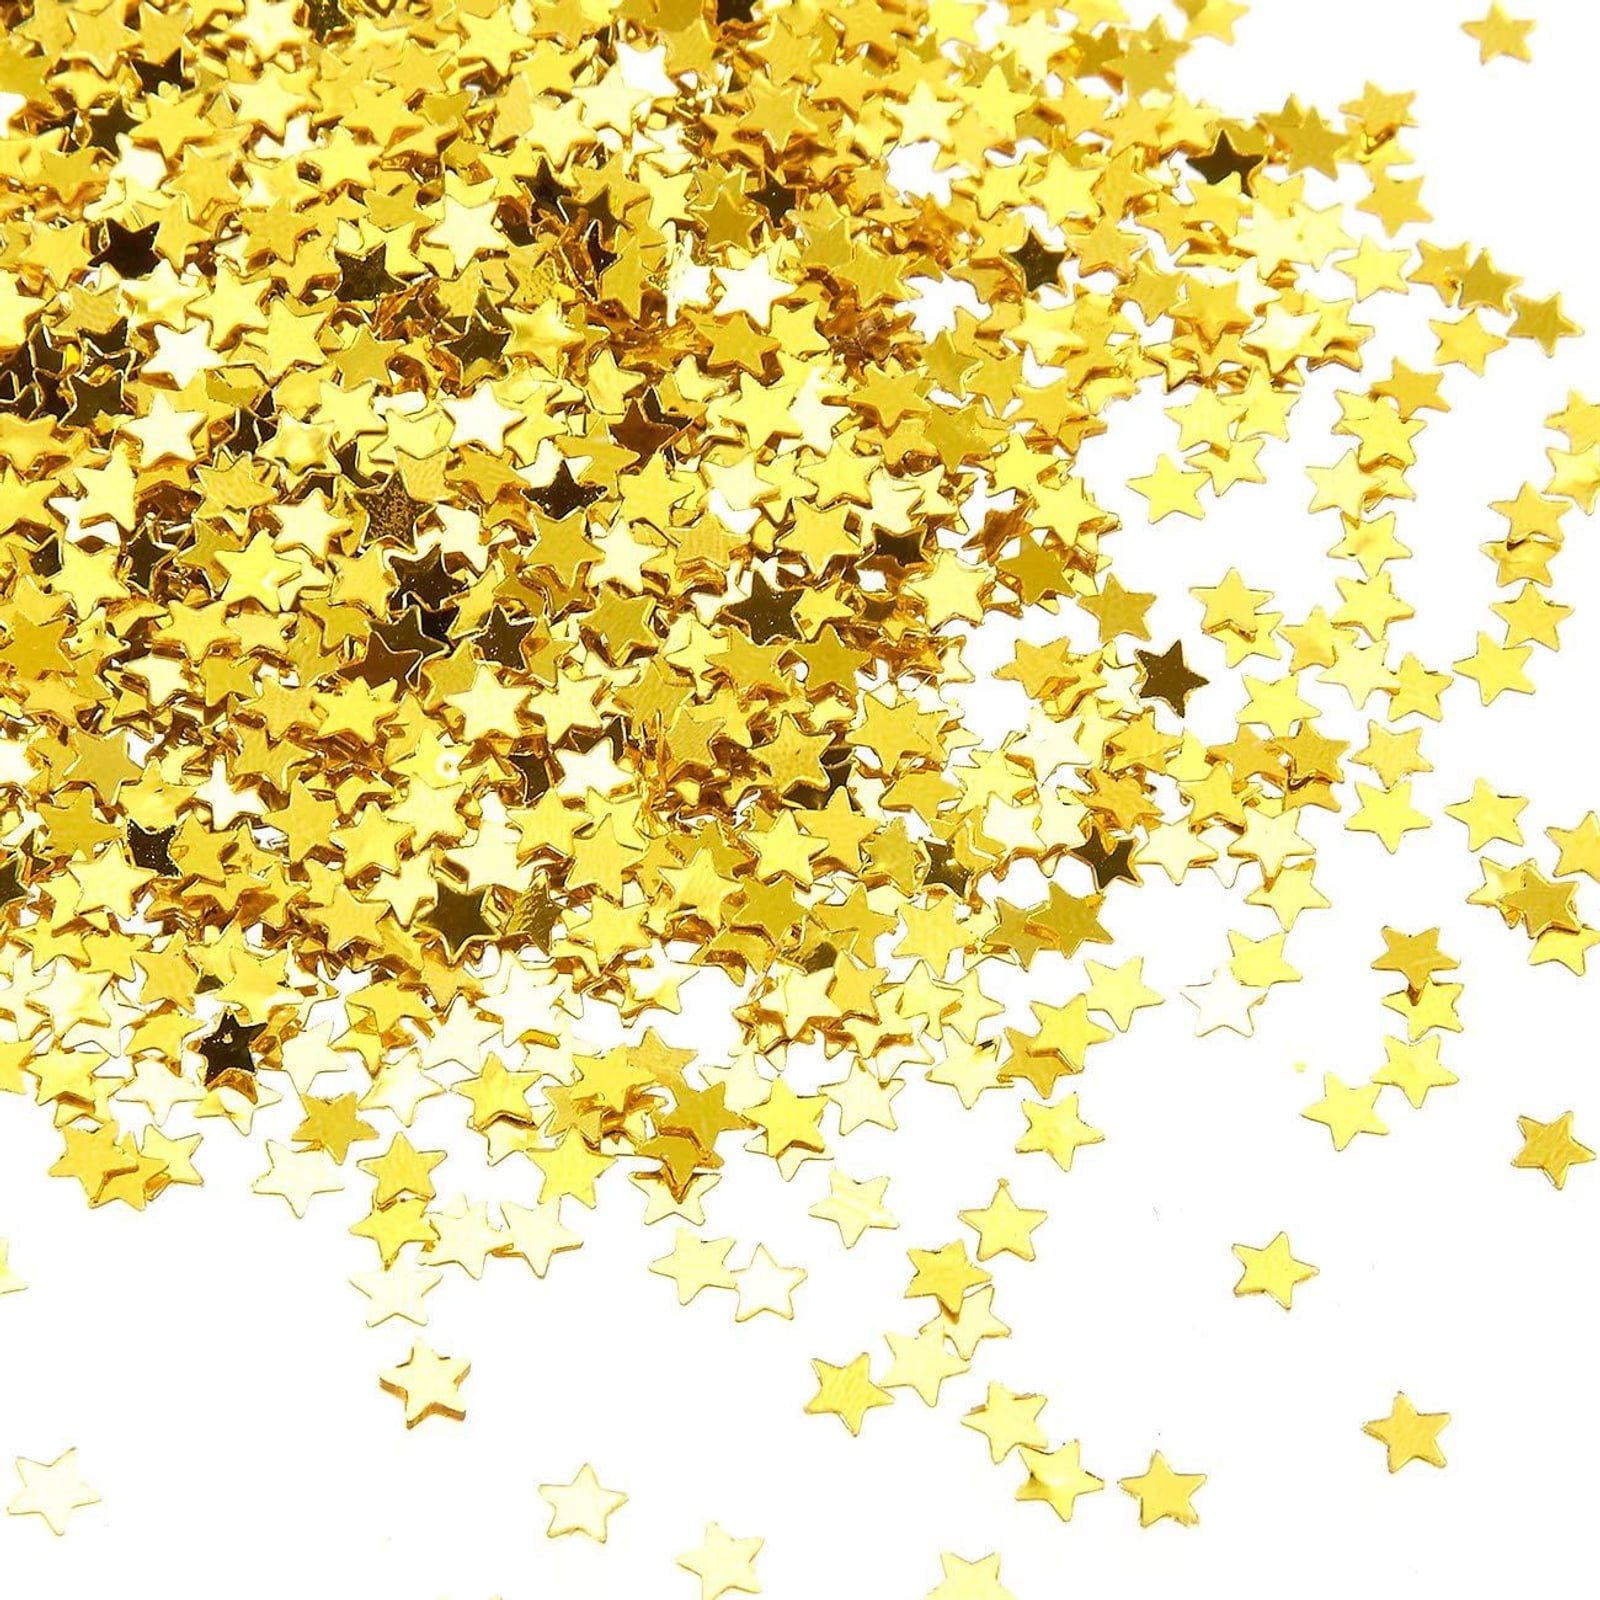 14g Pack Star Shaped Confetti Multicolour